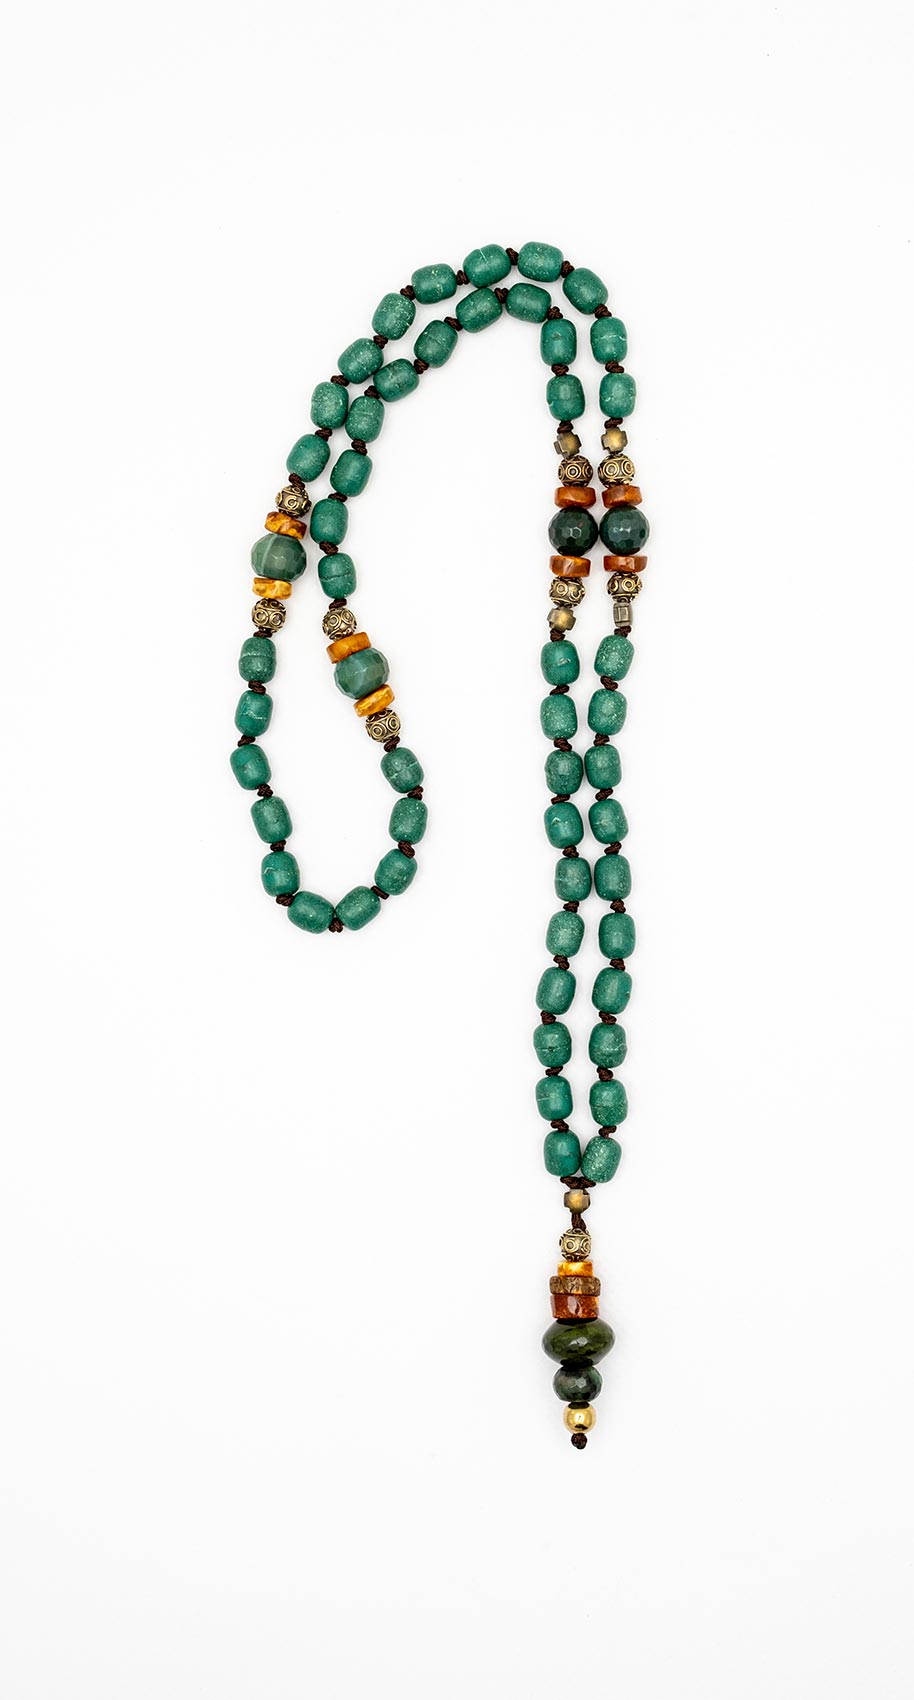 Muslim Prayer bead made of Camel Bone with inlaid pins of tin